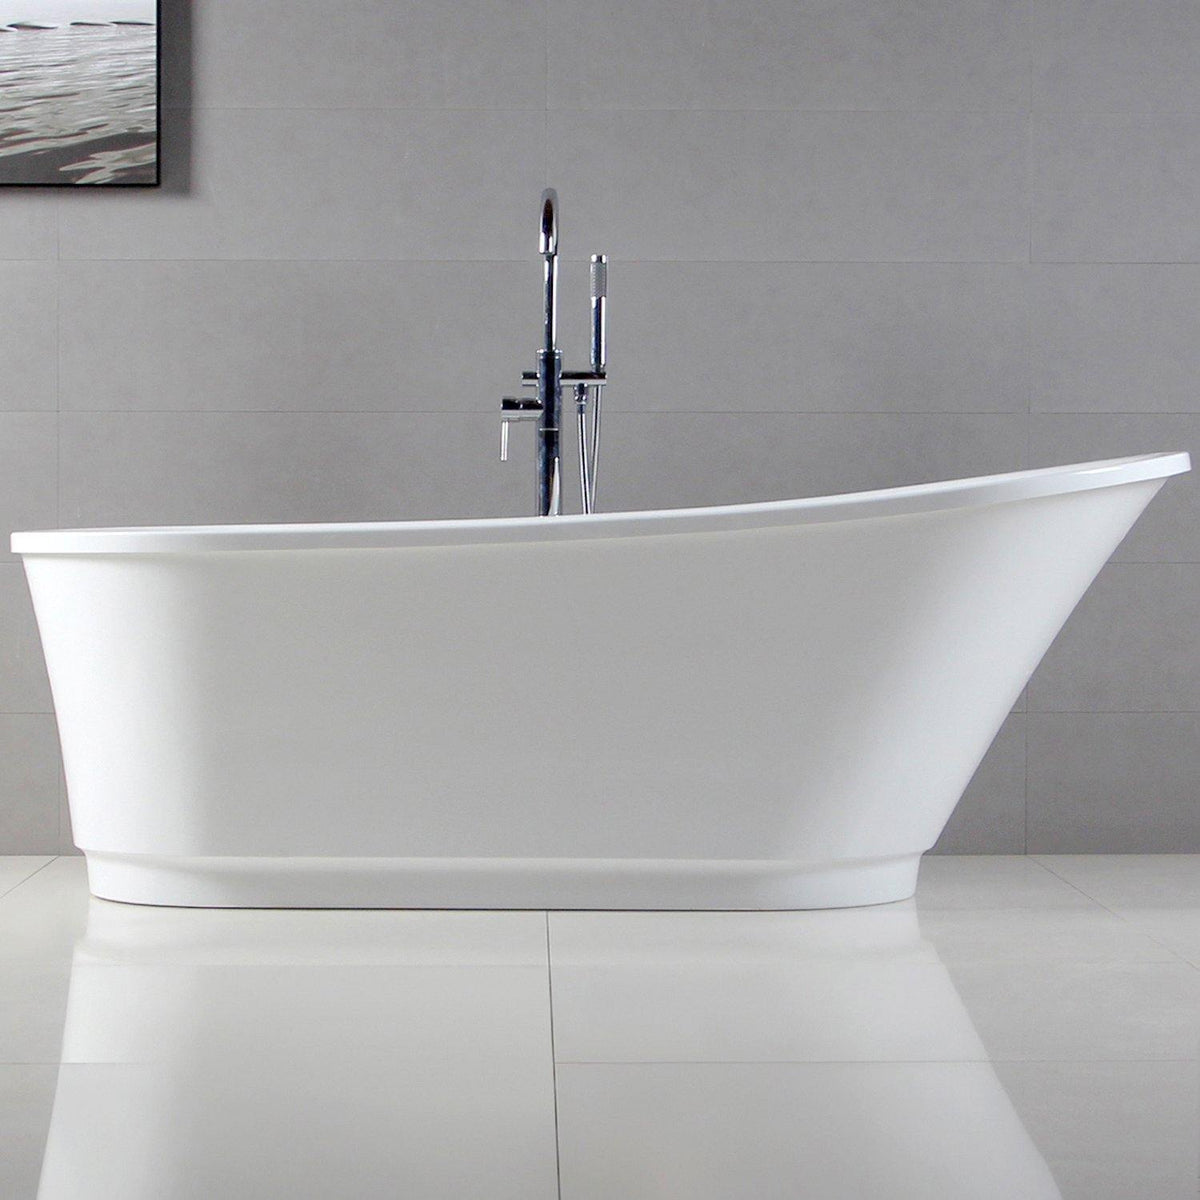 How to Install a Bathtub: Install an Acrylic Tub and Tub Surround